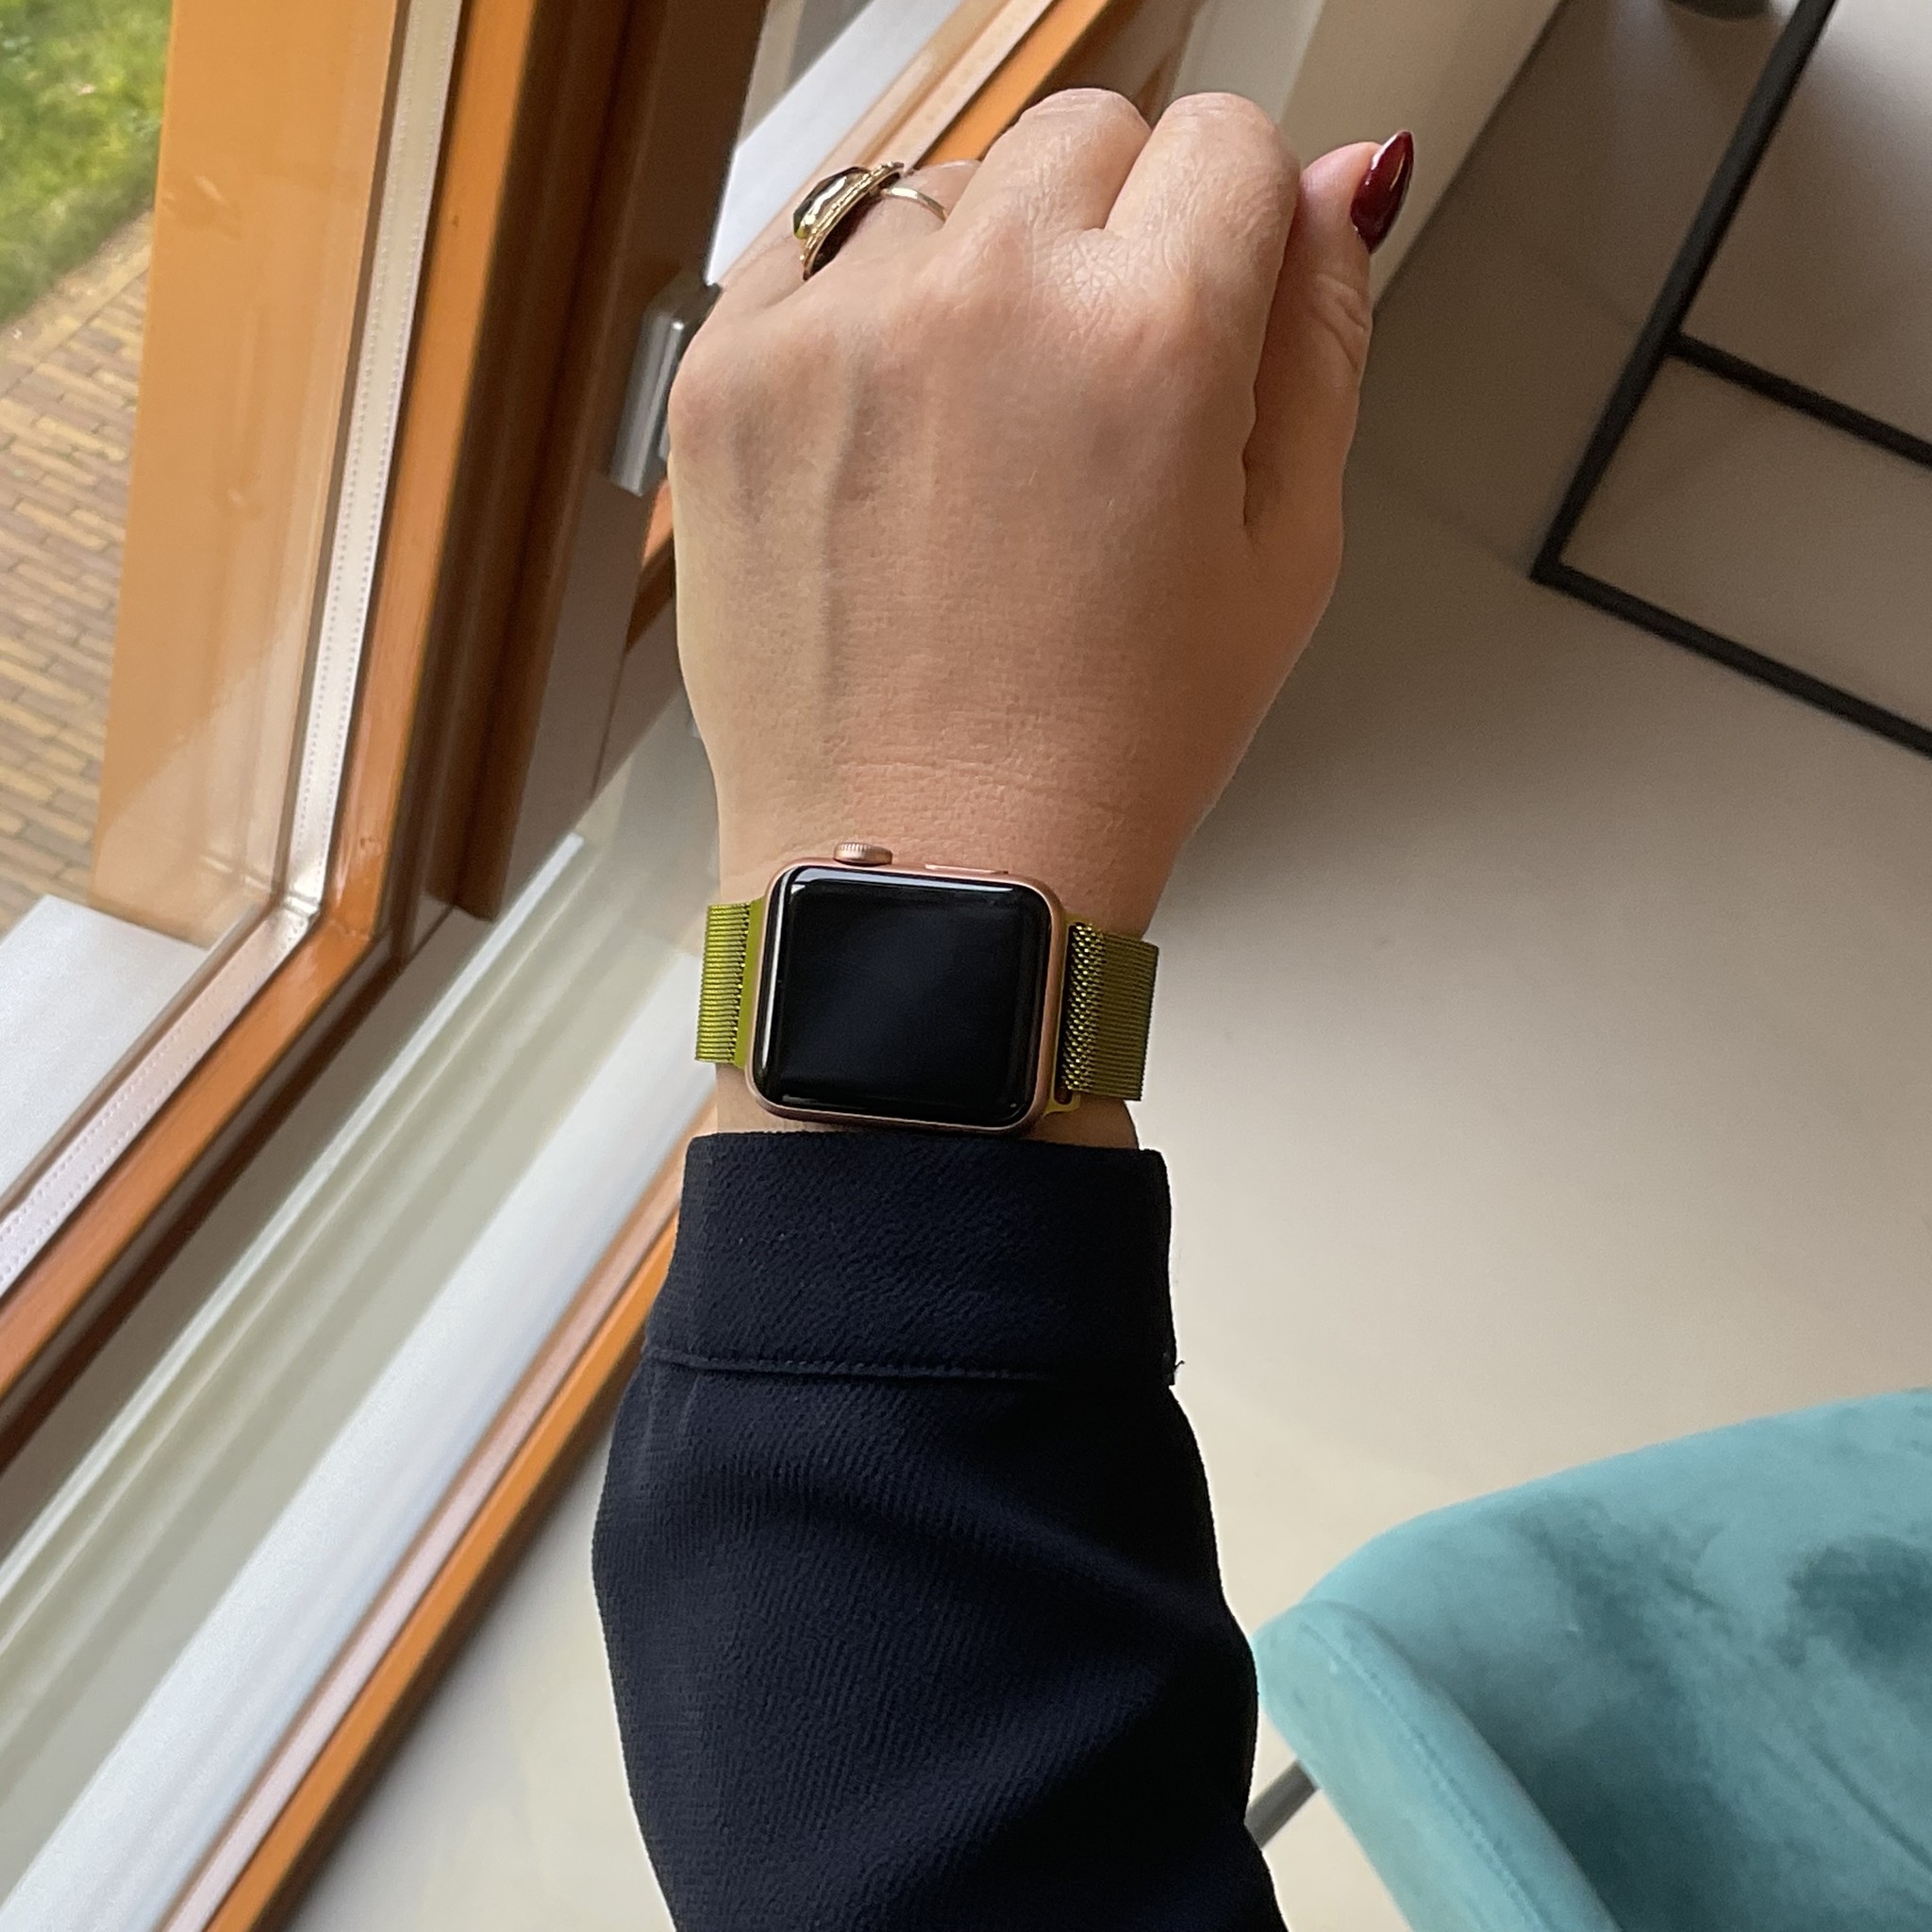 Bracelet milanais Apple Watch - vert